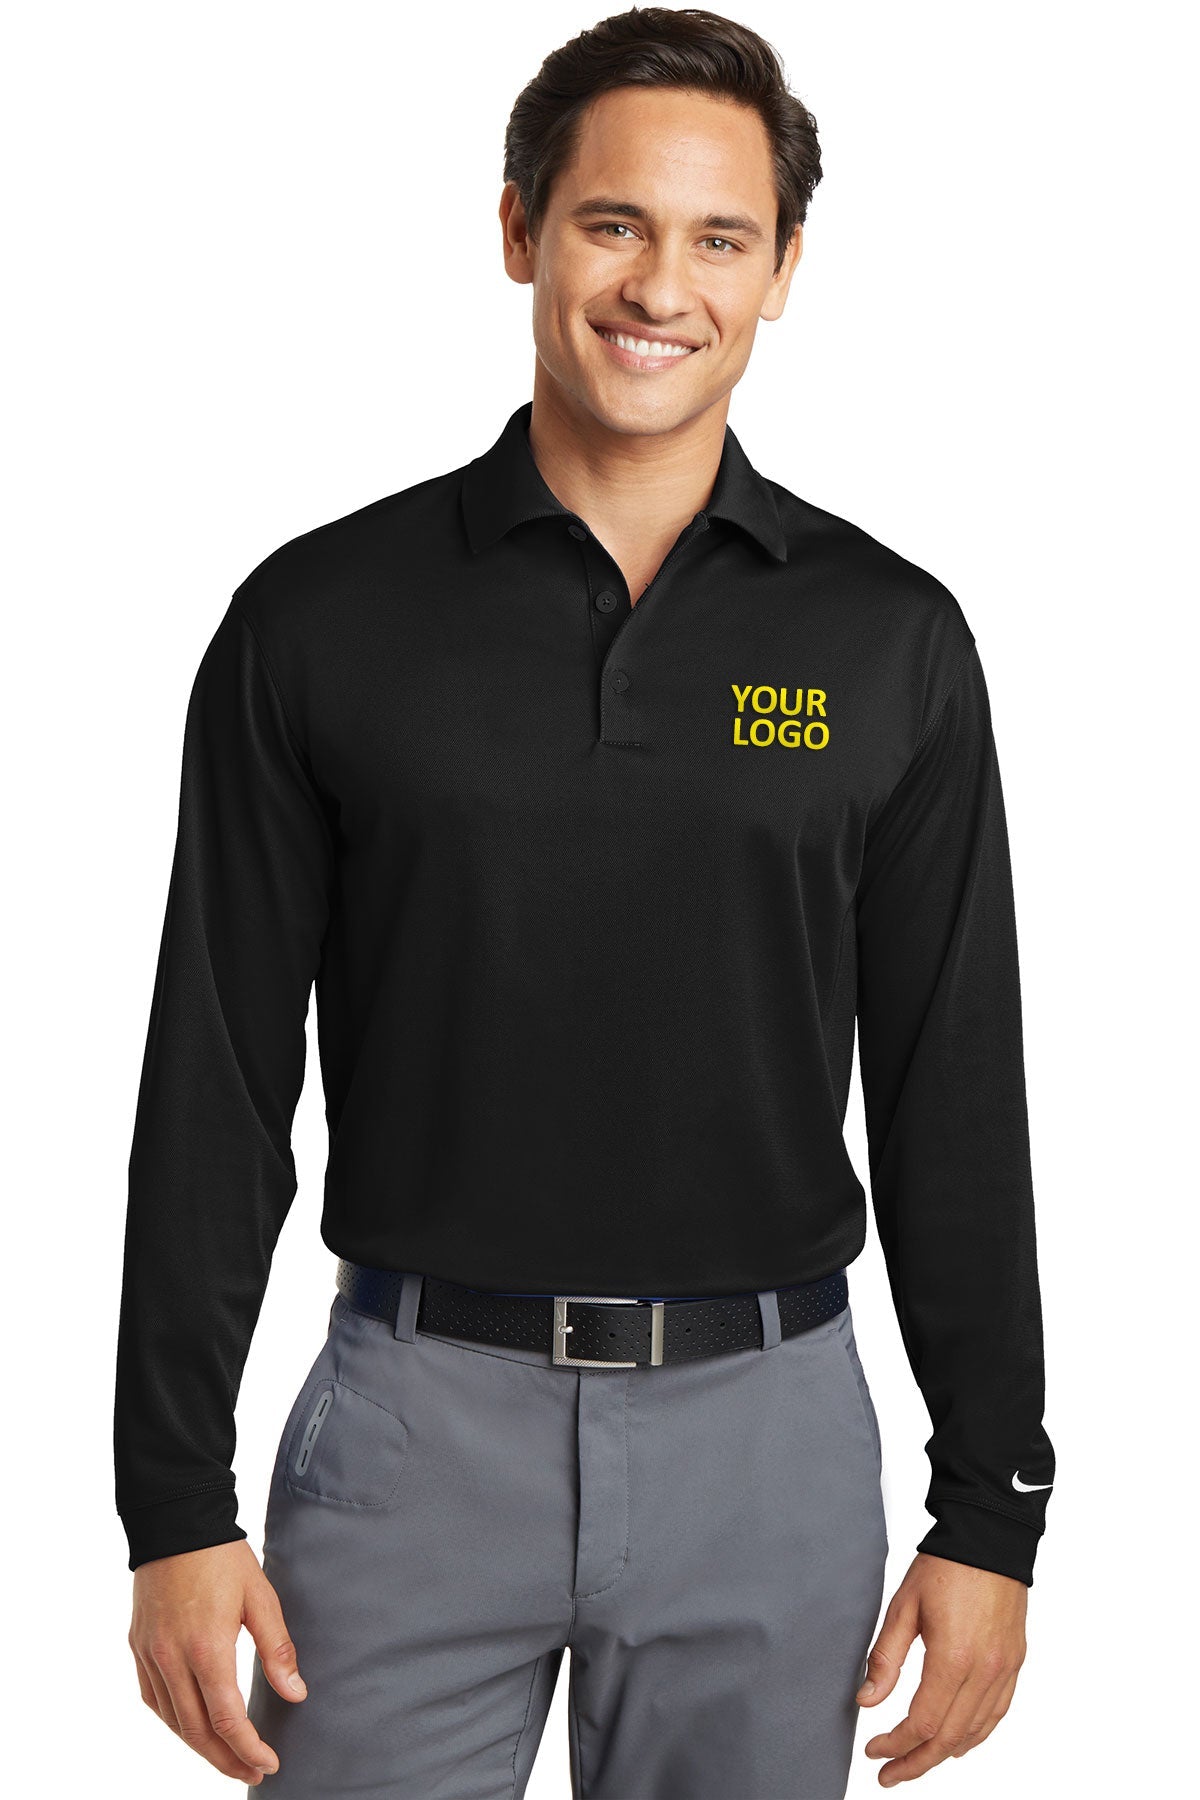 nike black 604940 work polo shirts with logo